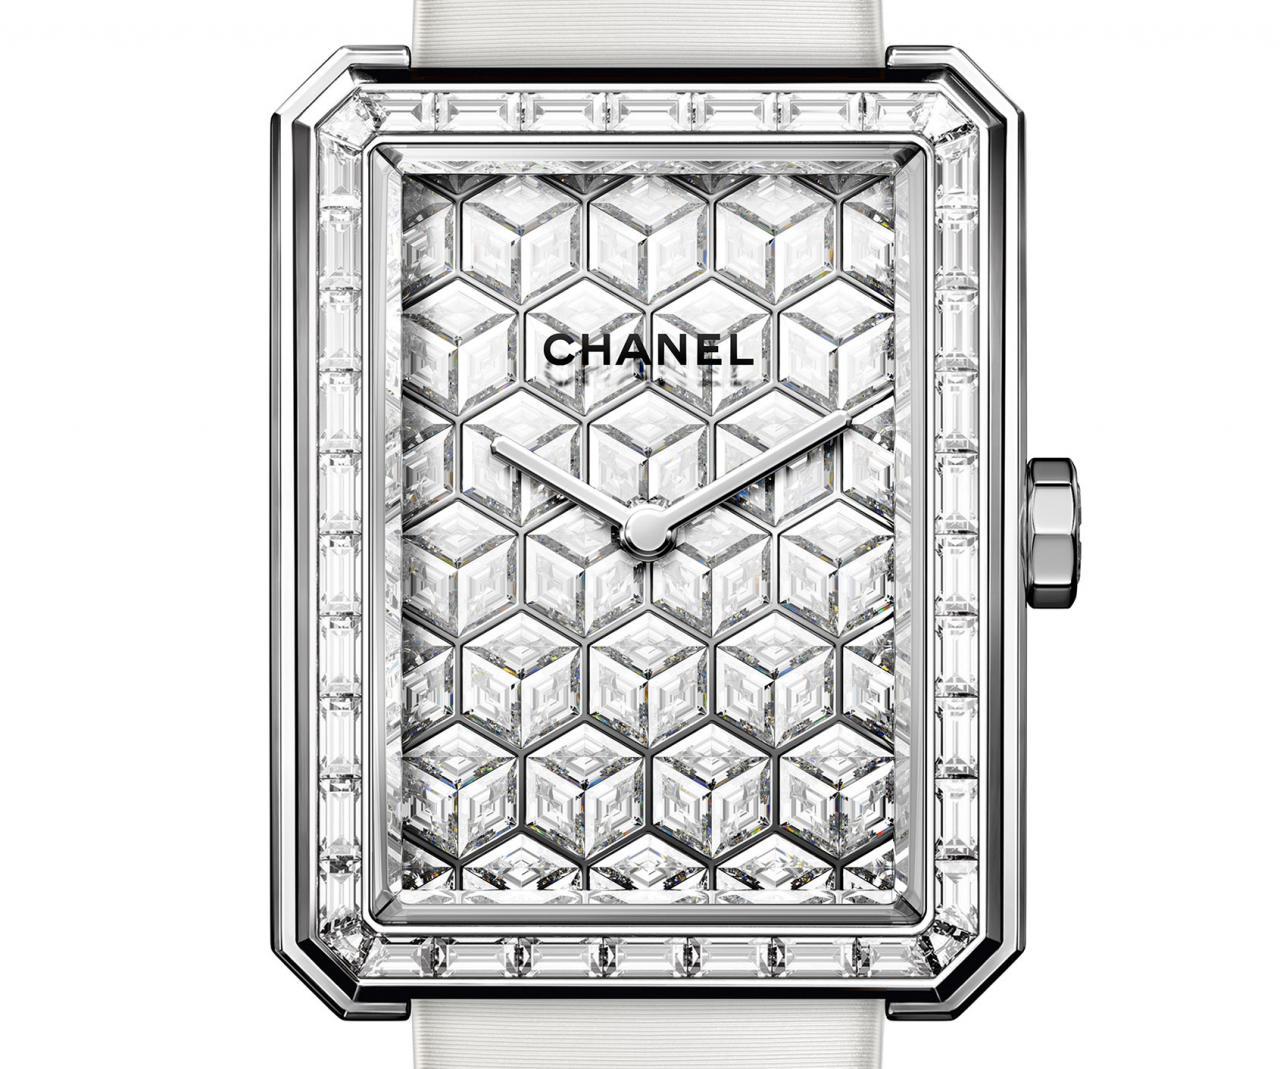 The Arty Diamonds version of the Chanel Boy-Friend